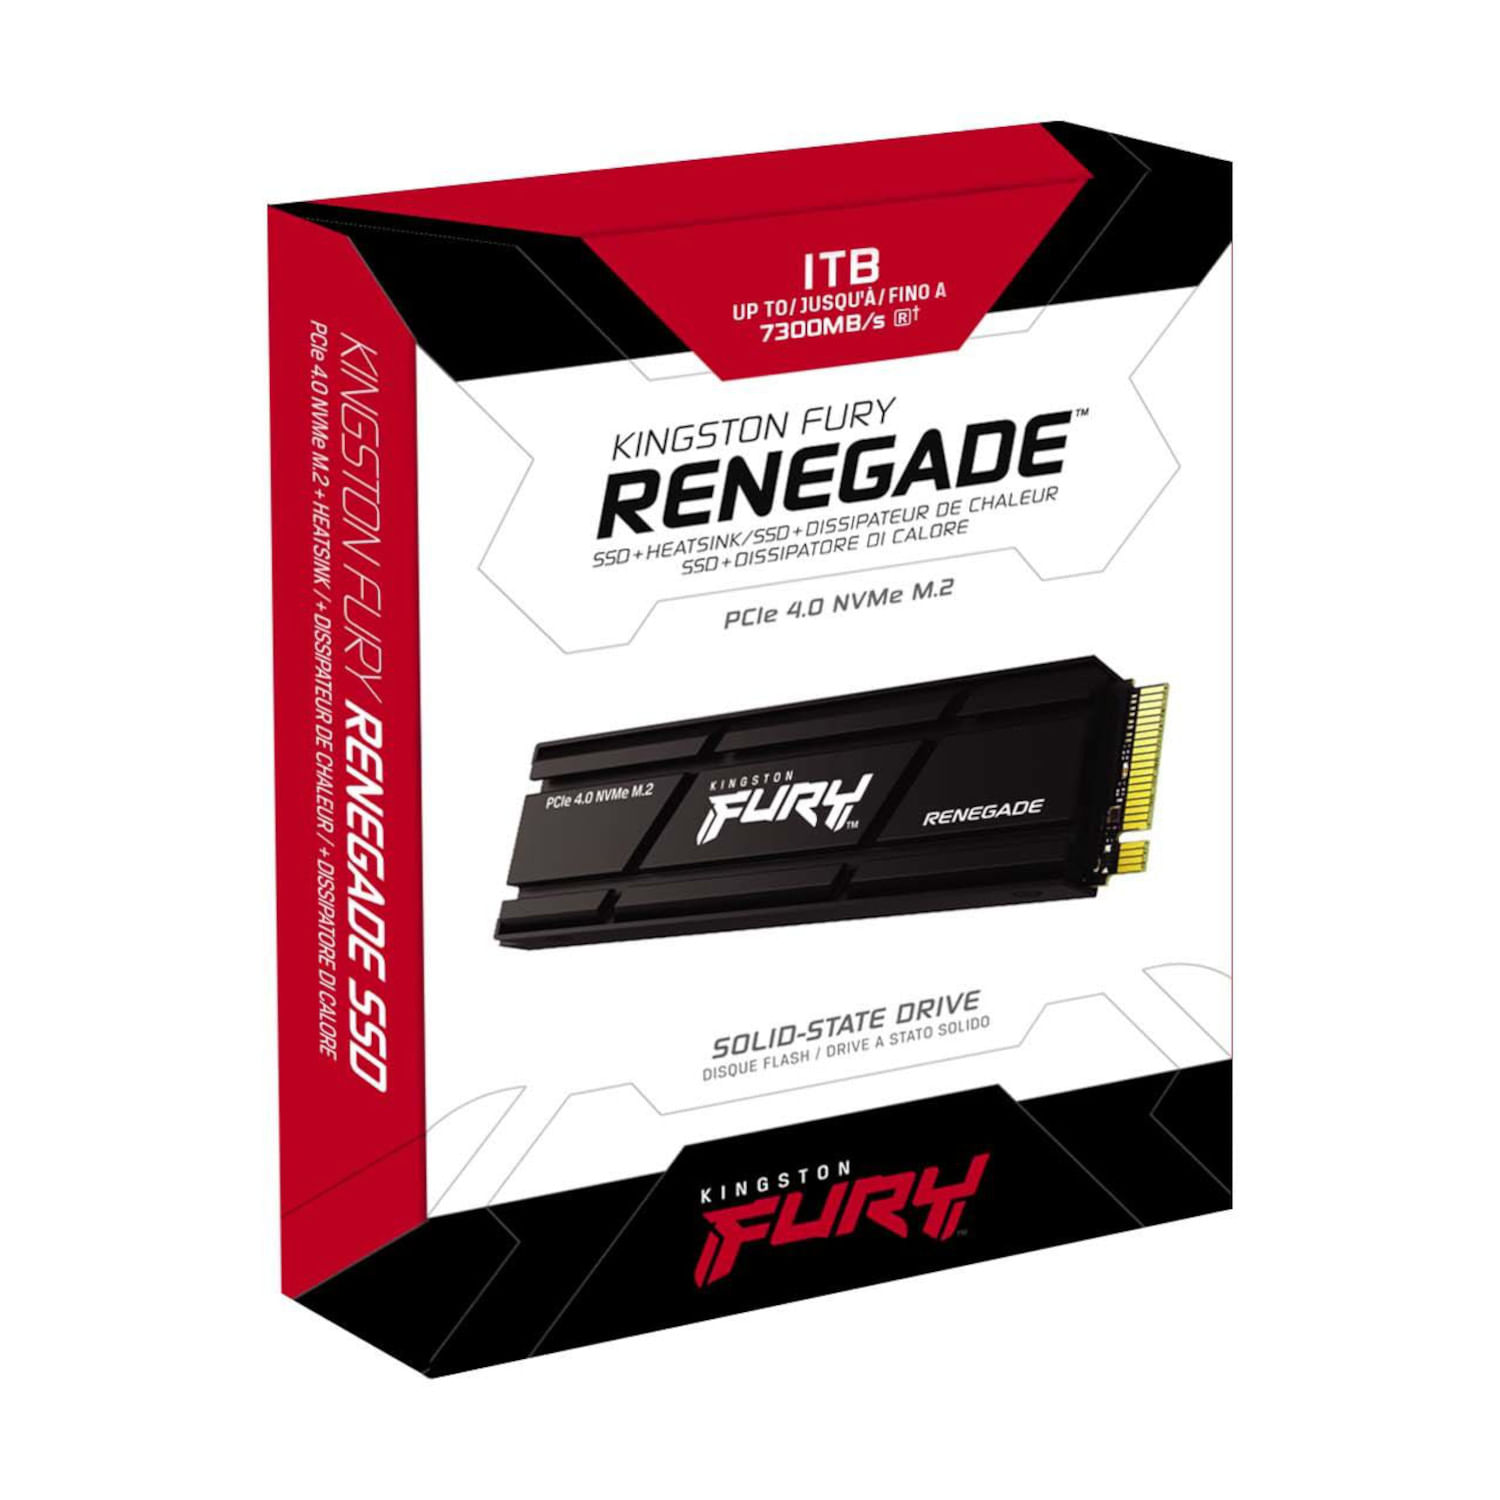 SD Kingston FURY Renegade 2TB Disipador PCIe 4.0 NVMe M.2 PS5 Ready